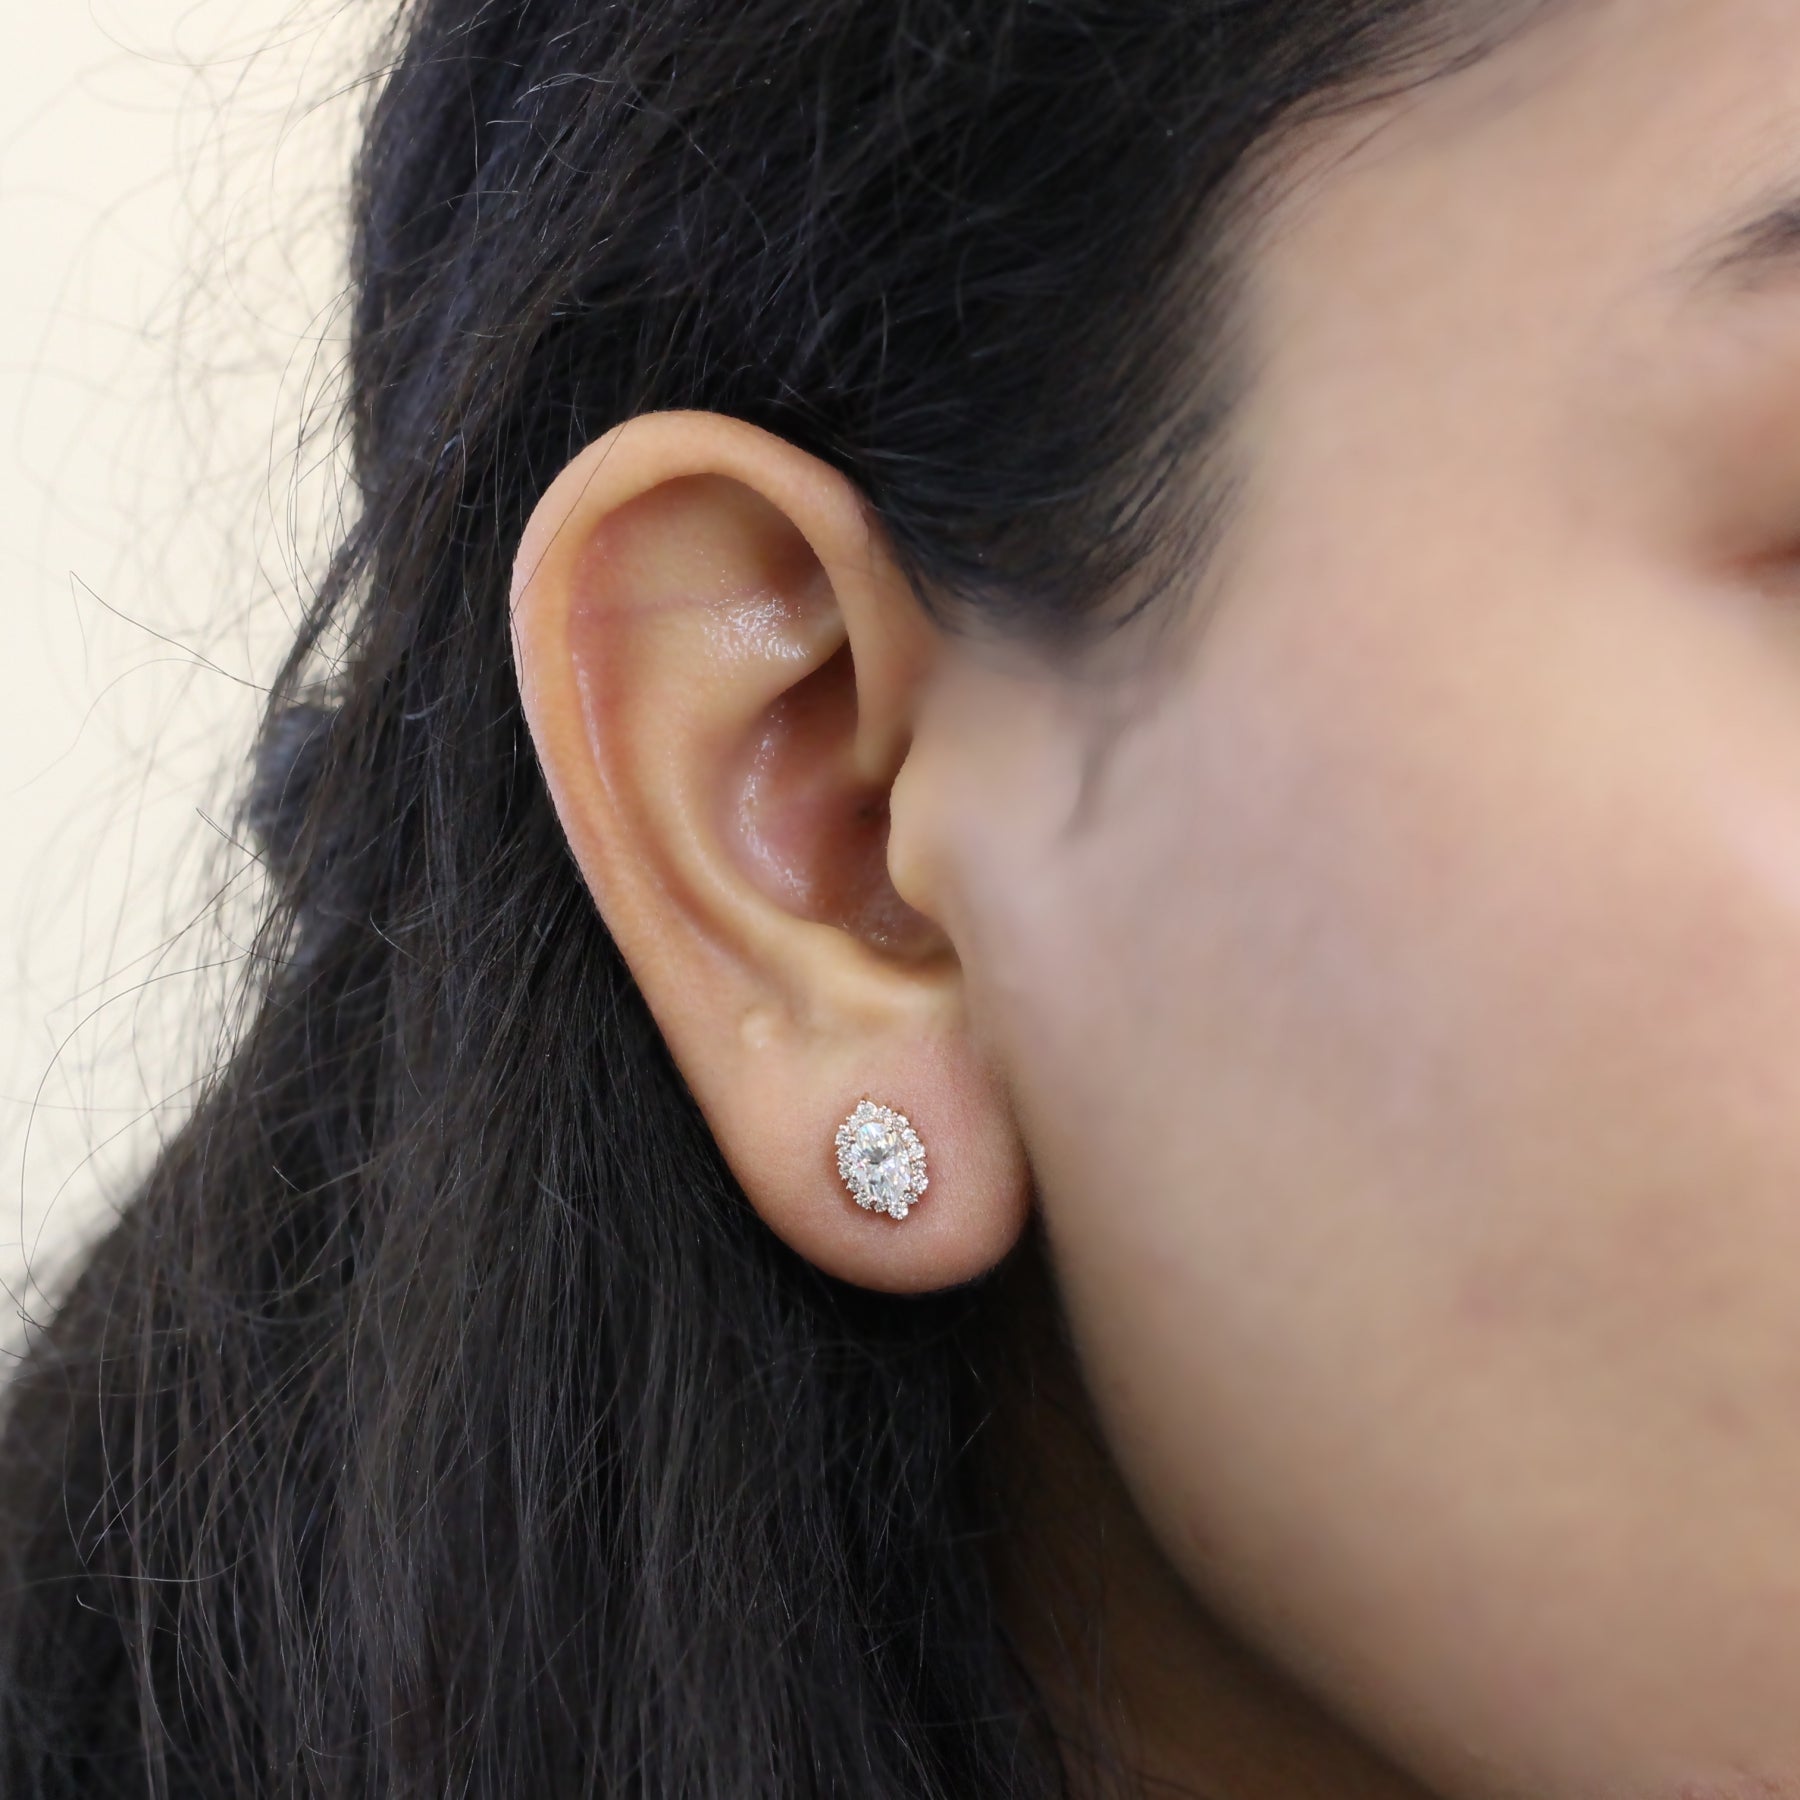 Tiara halo diamond oval moissanite earrings rose gold diamond studs la more design jewelry